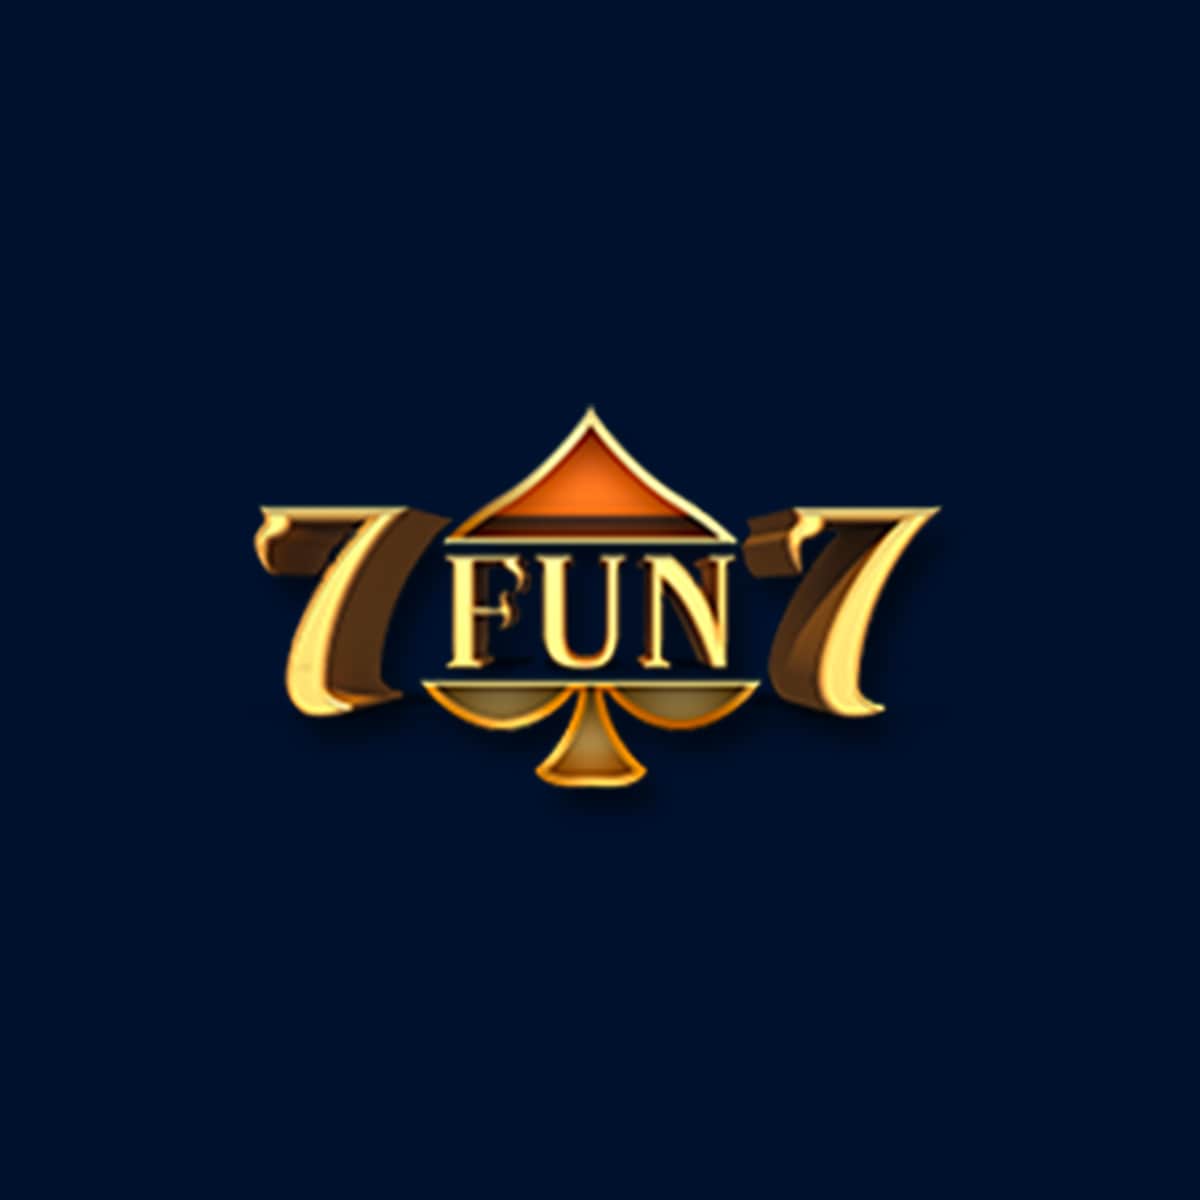 7Fun7 Online Casino Logo